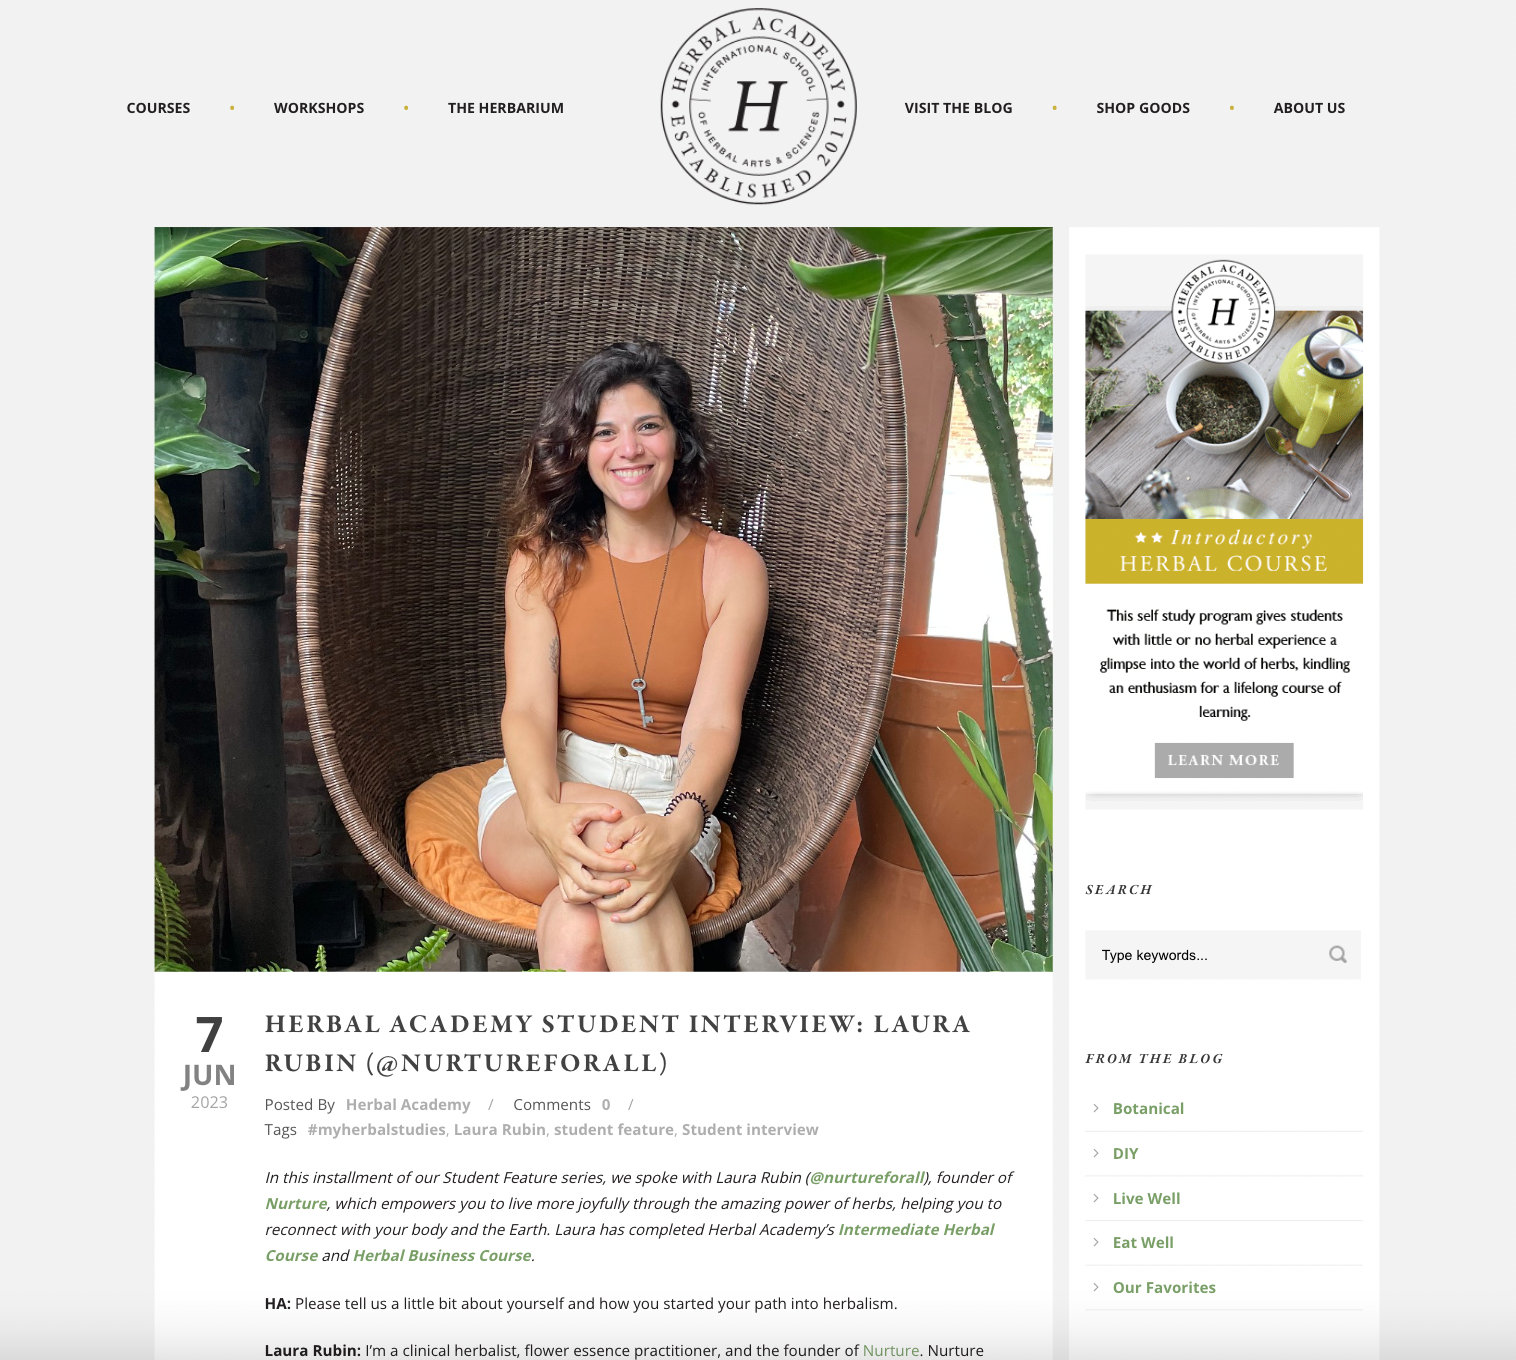 The Herbal Academy features Herbalist Laura Rubin